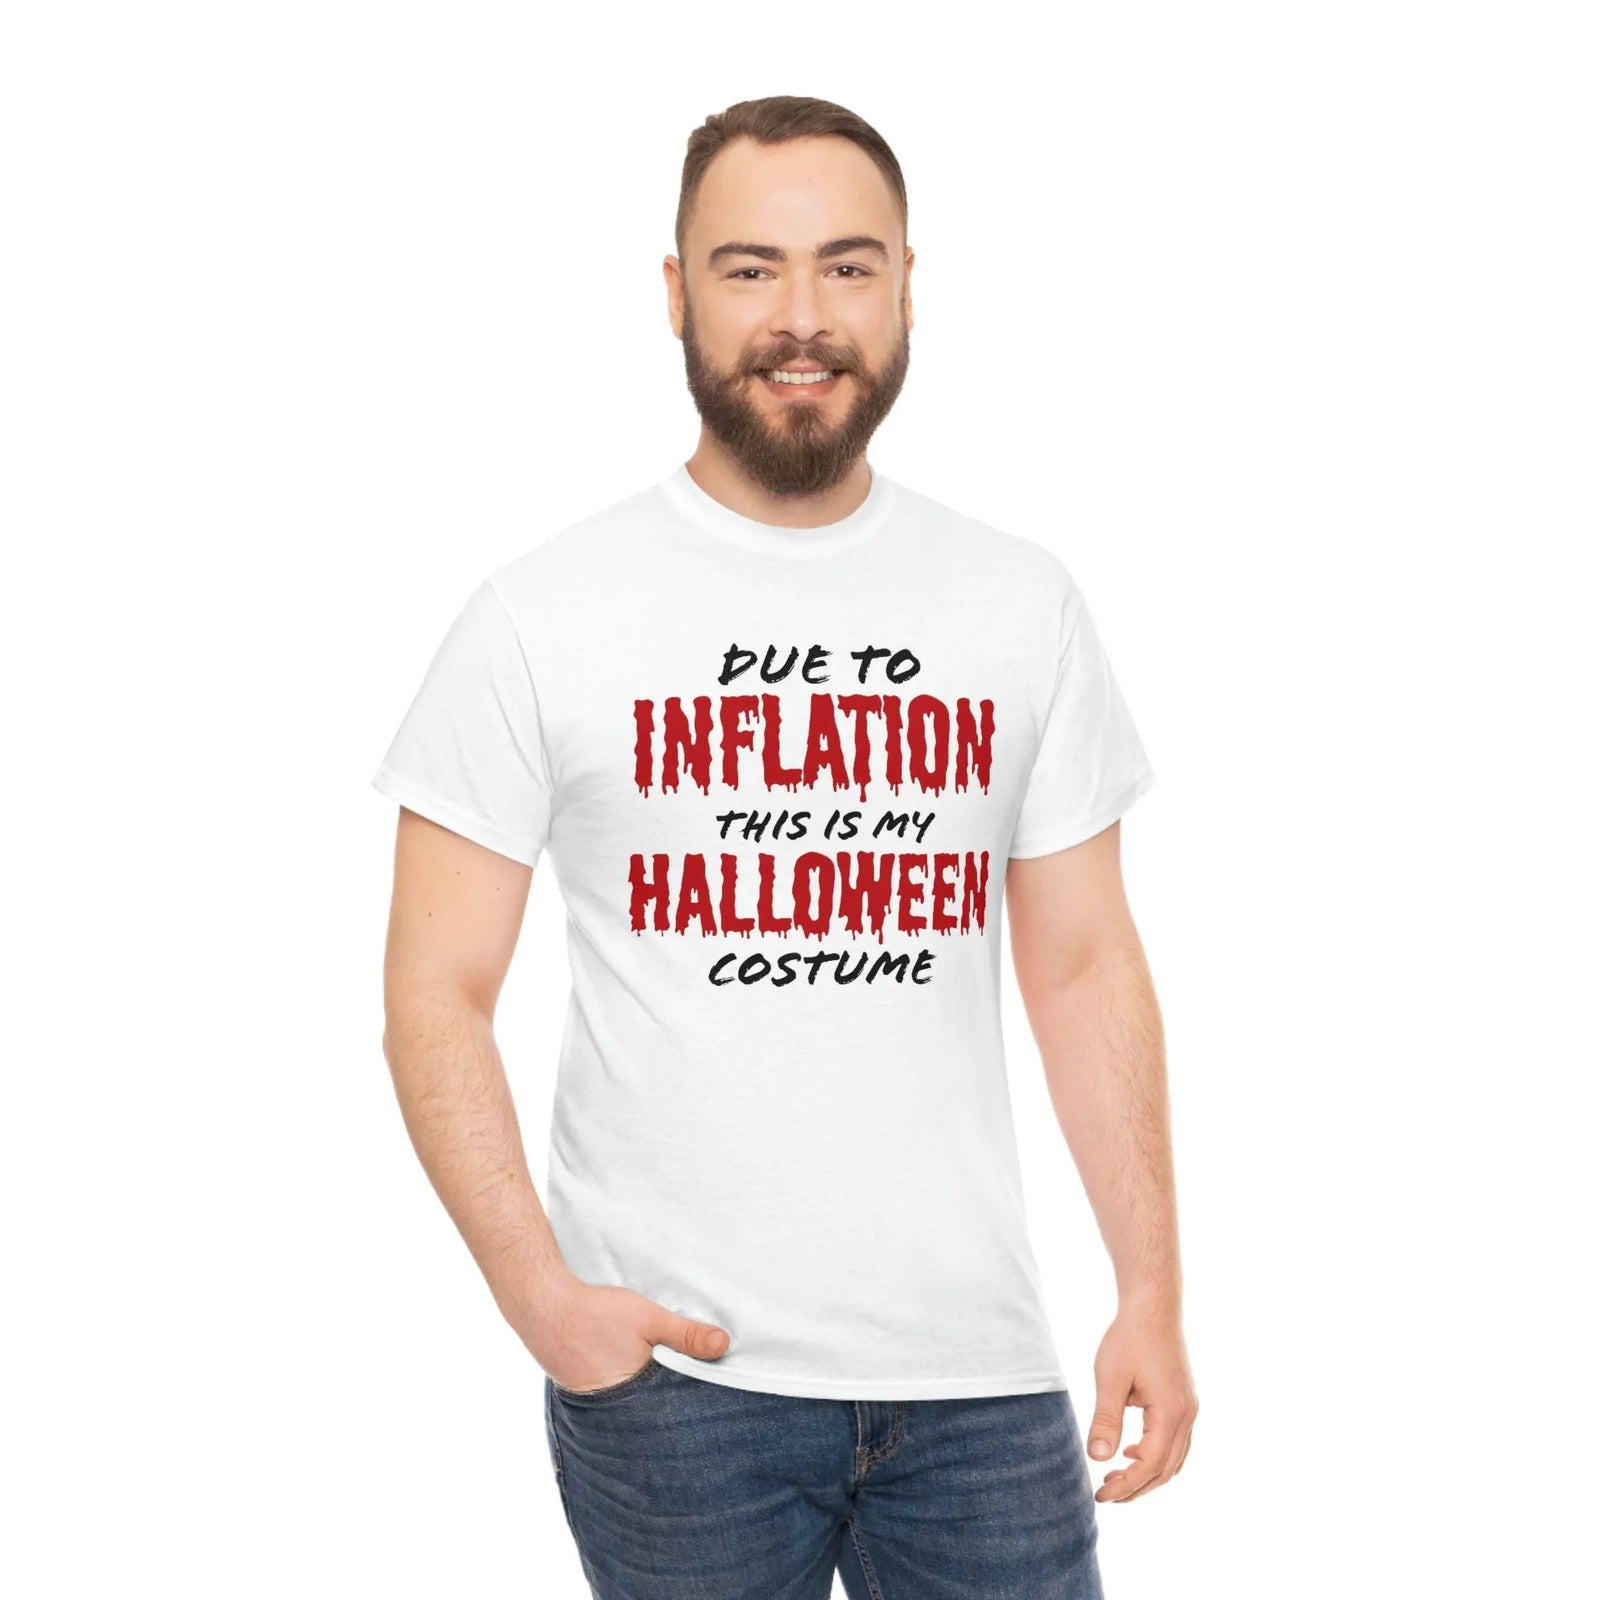 Inflation Halloween Costume t-shirt!